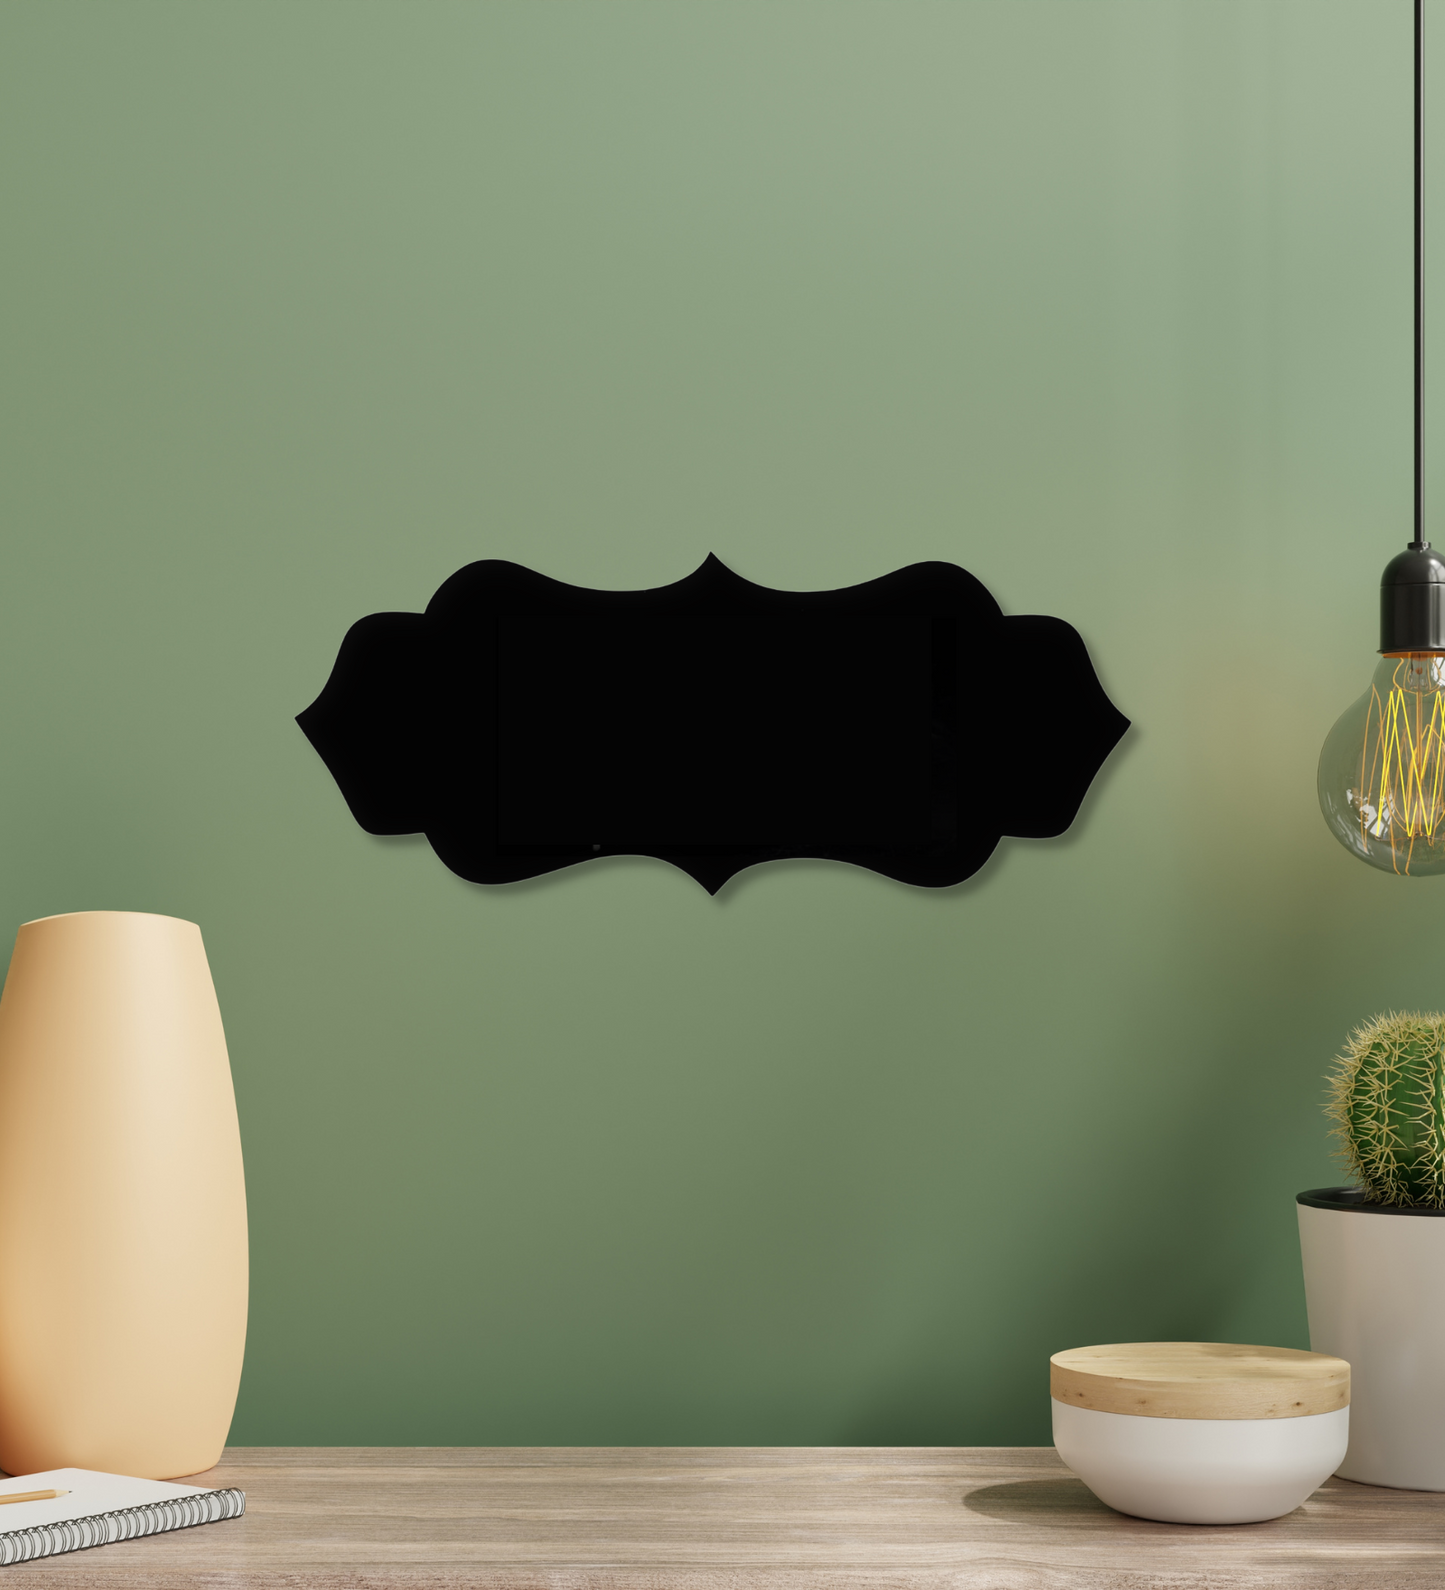 Unique Design Black Board For Kitchen or Gallery Wall